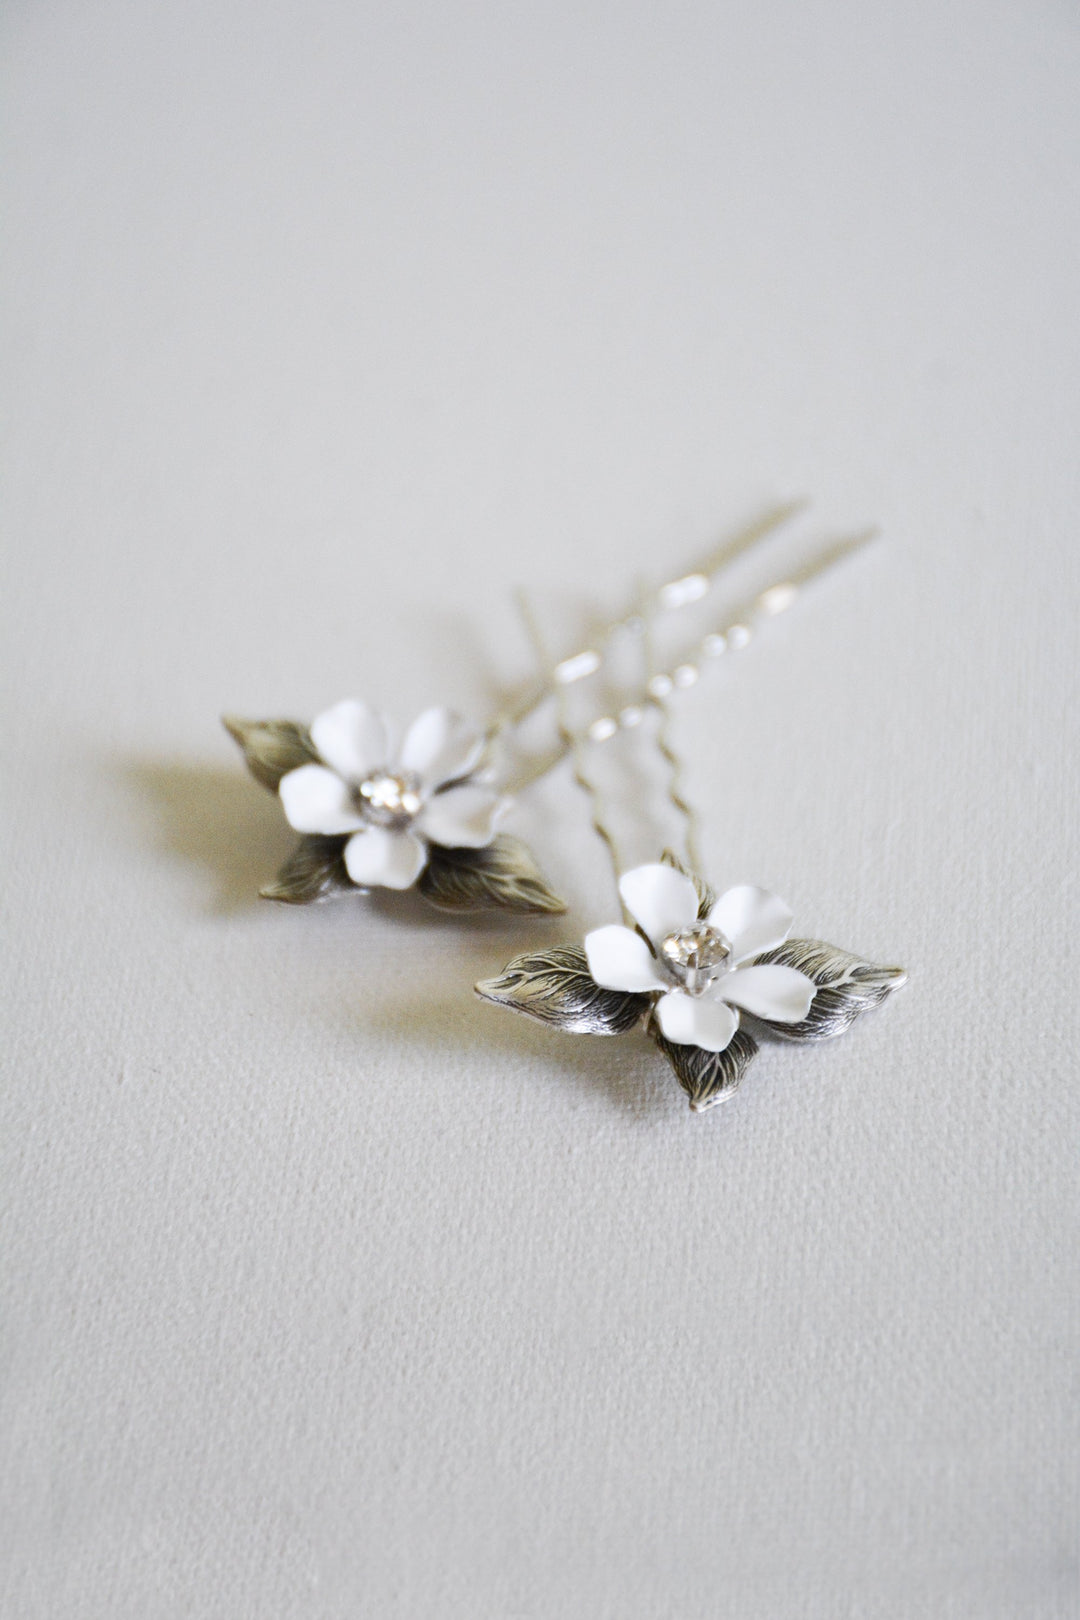 Floral hair pins in silver.